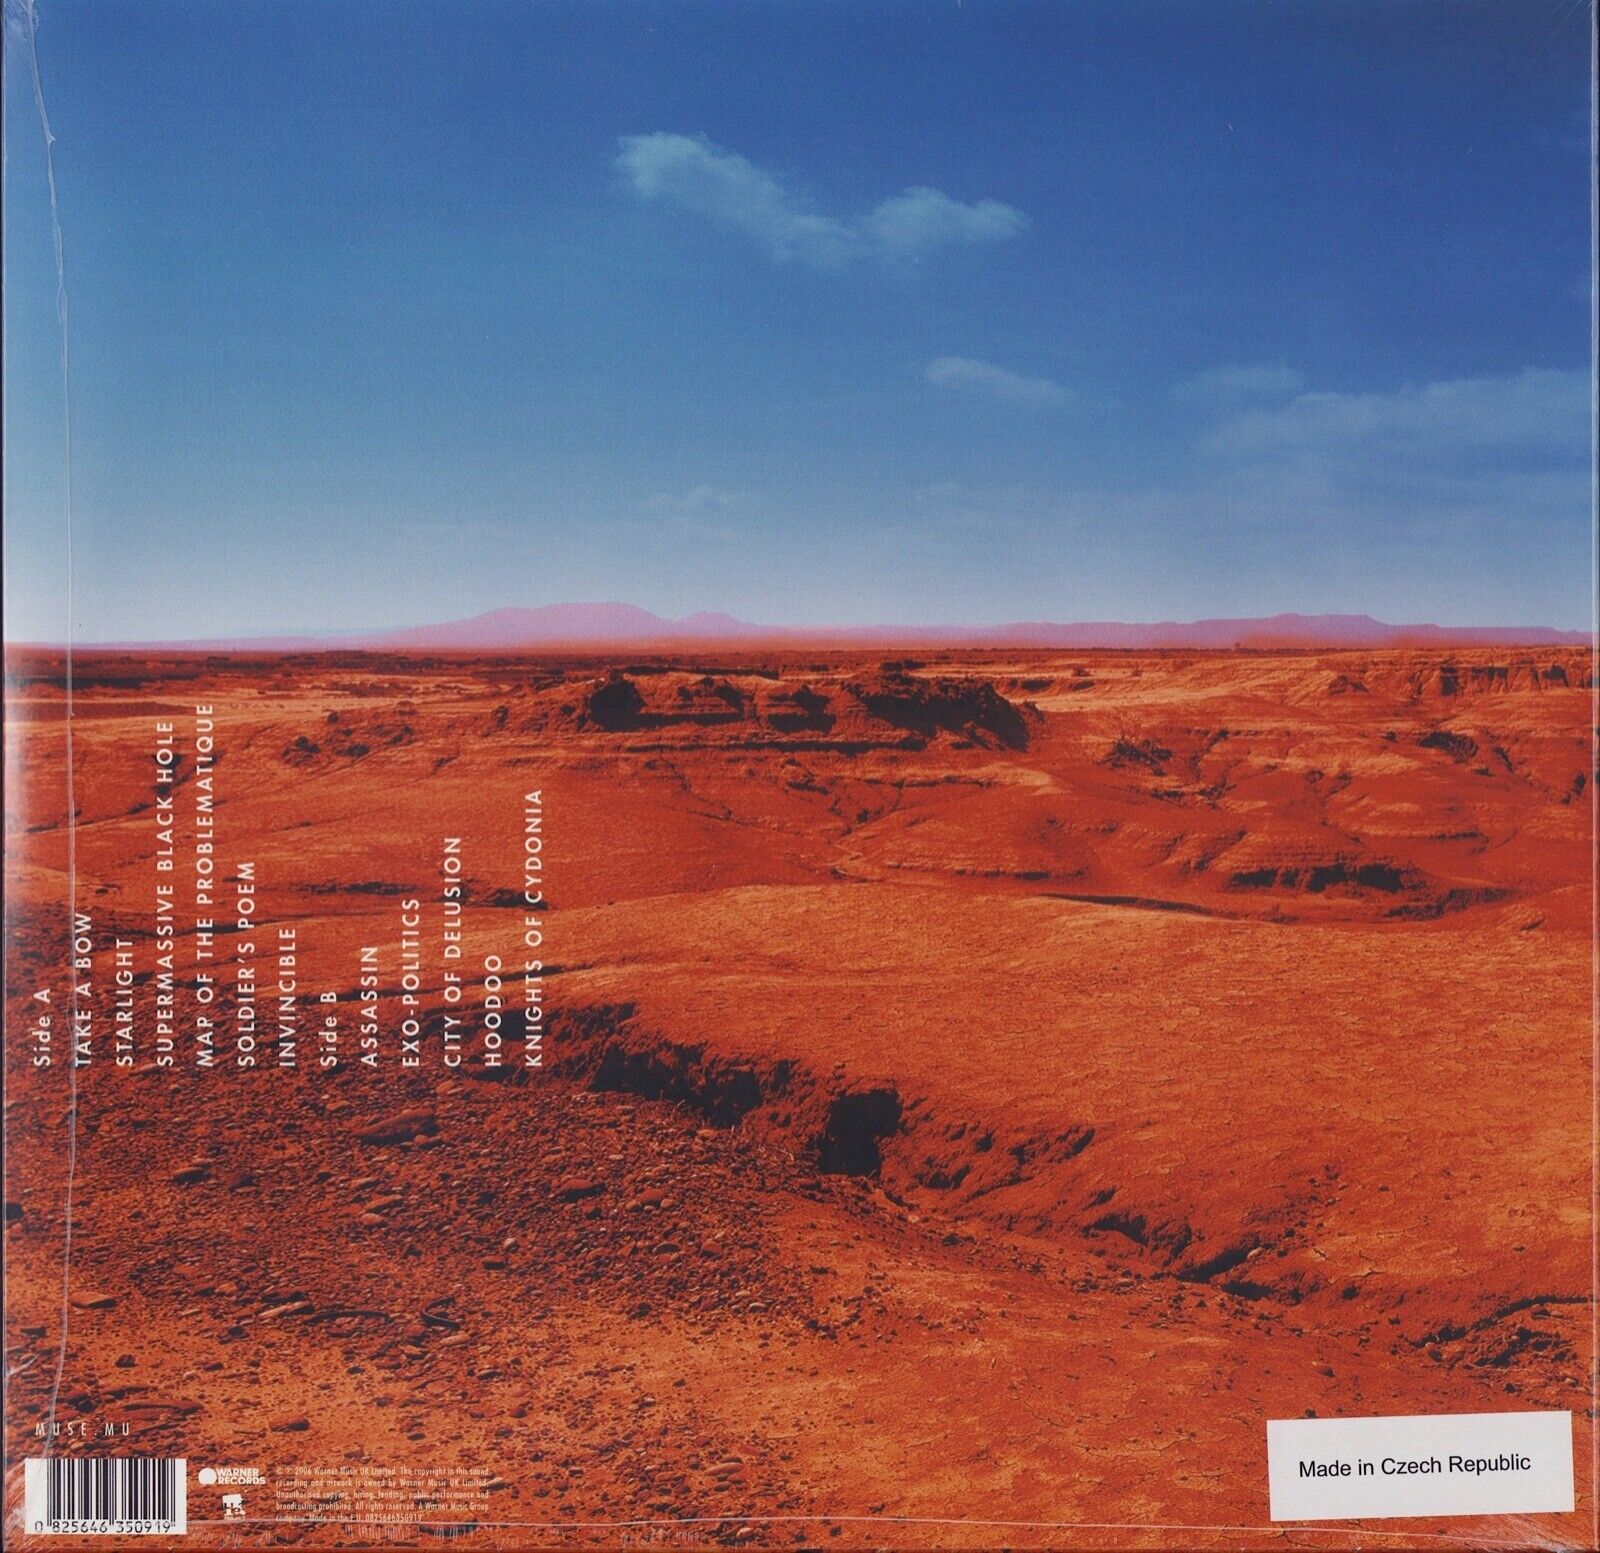 Muse ‎- Black Holes And Revelations Vinyl LP